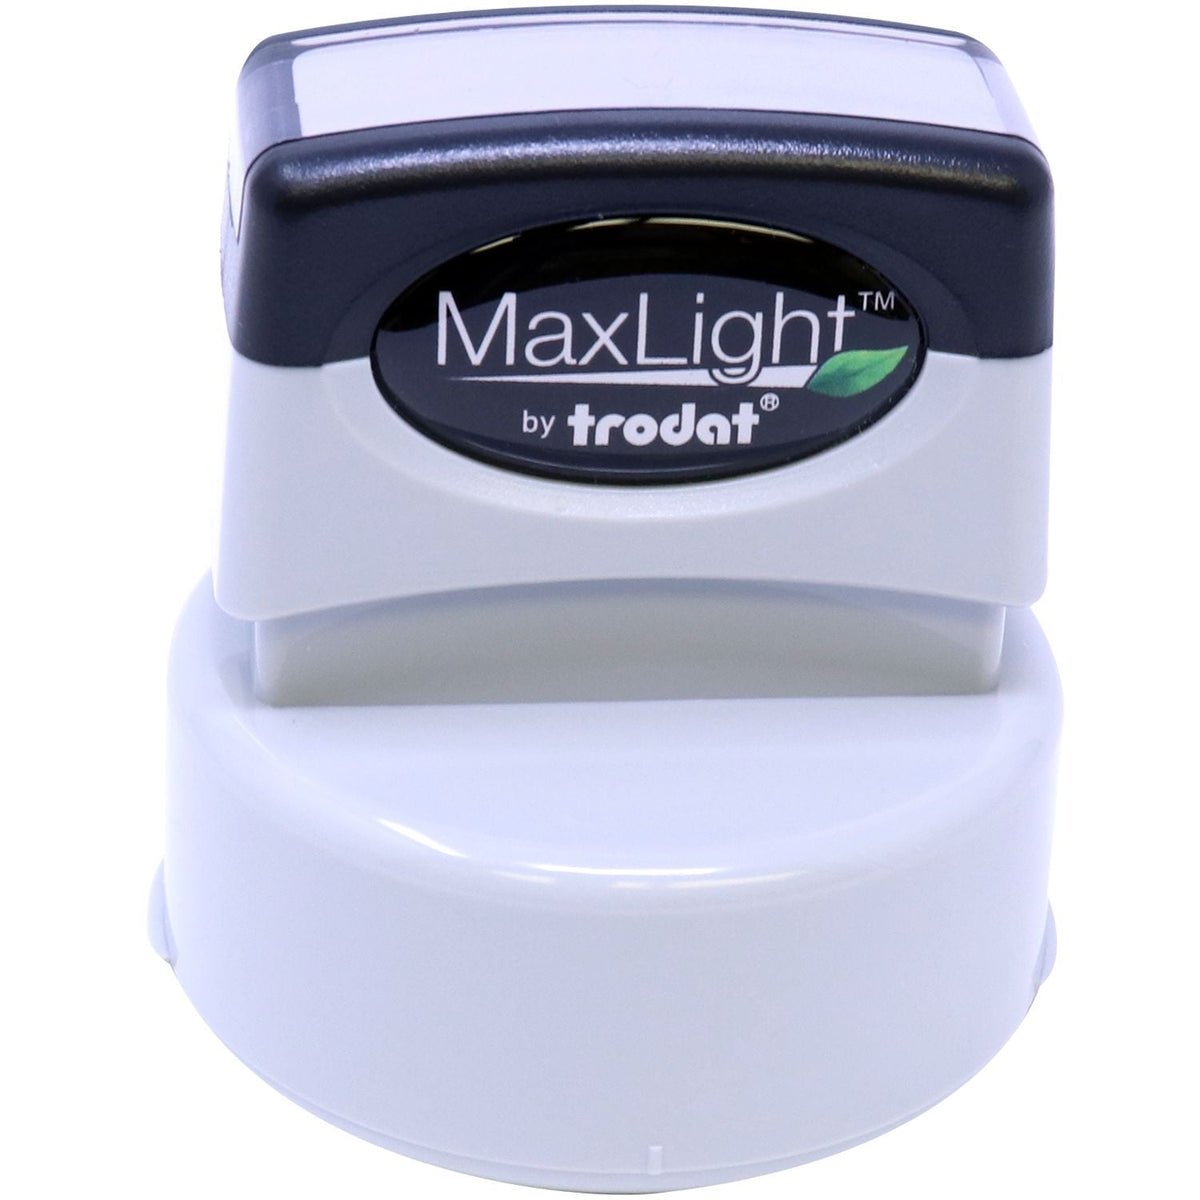 Maxlight Custom Stamp Xl2 535 Top Front Angle